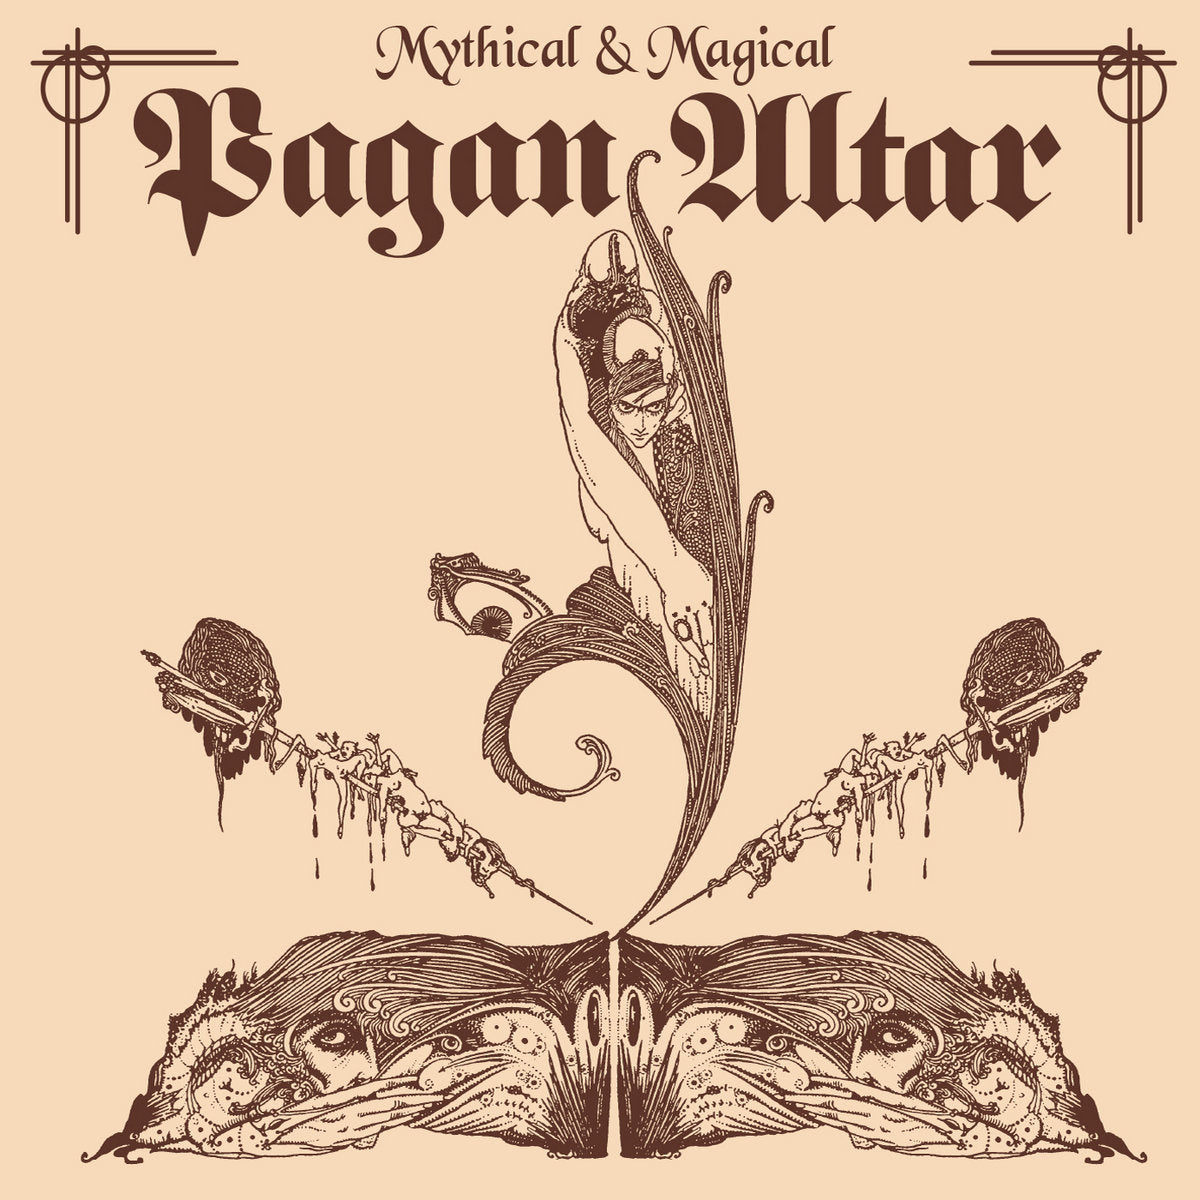 [SOLD OUT] PAGAN ALTAR "Mythical & Magical" vinyl double LP (2xLP gatefold)